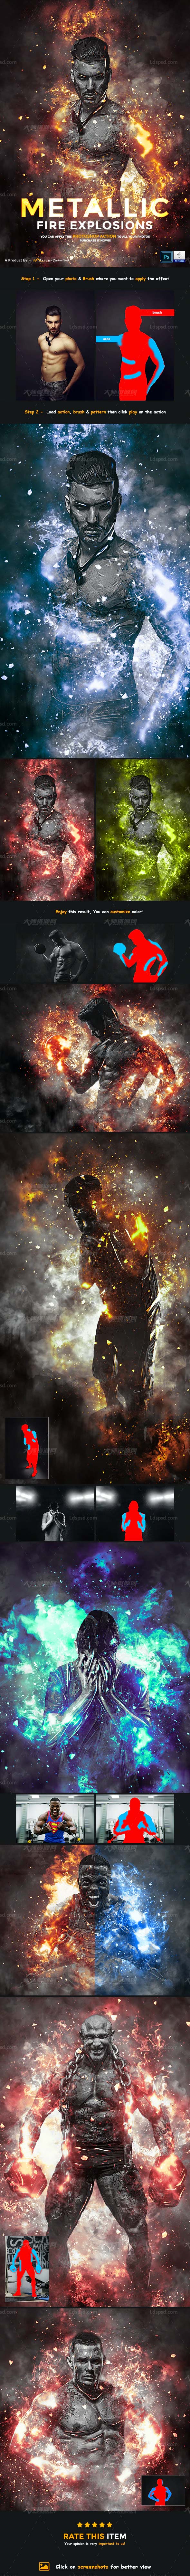 Metallic - Fire Explosion PS Action.jpg